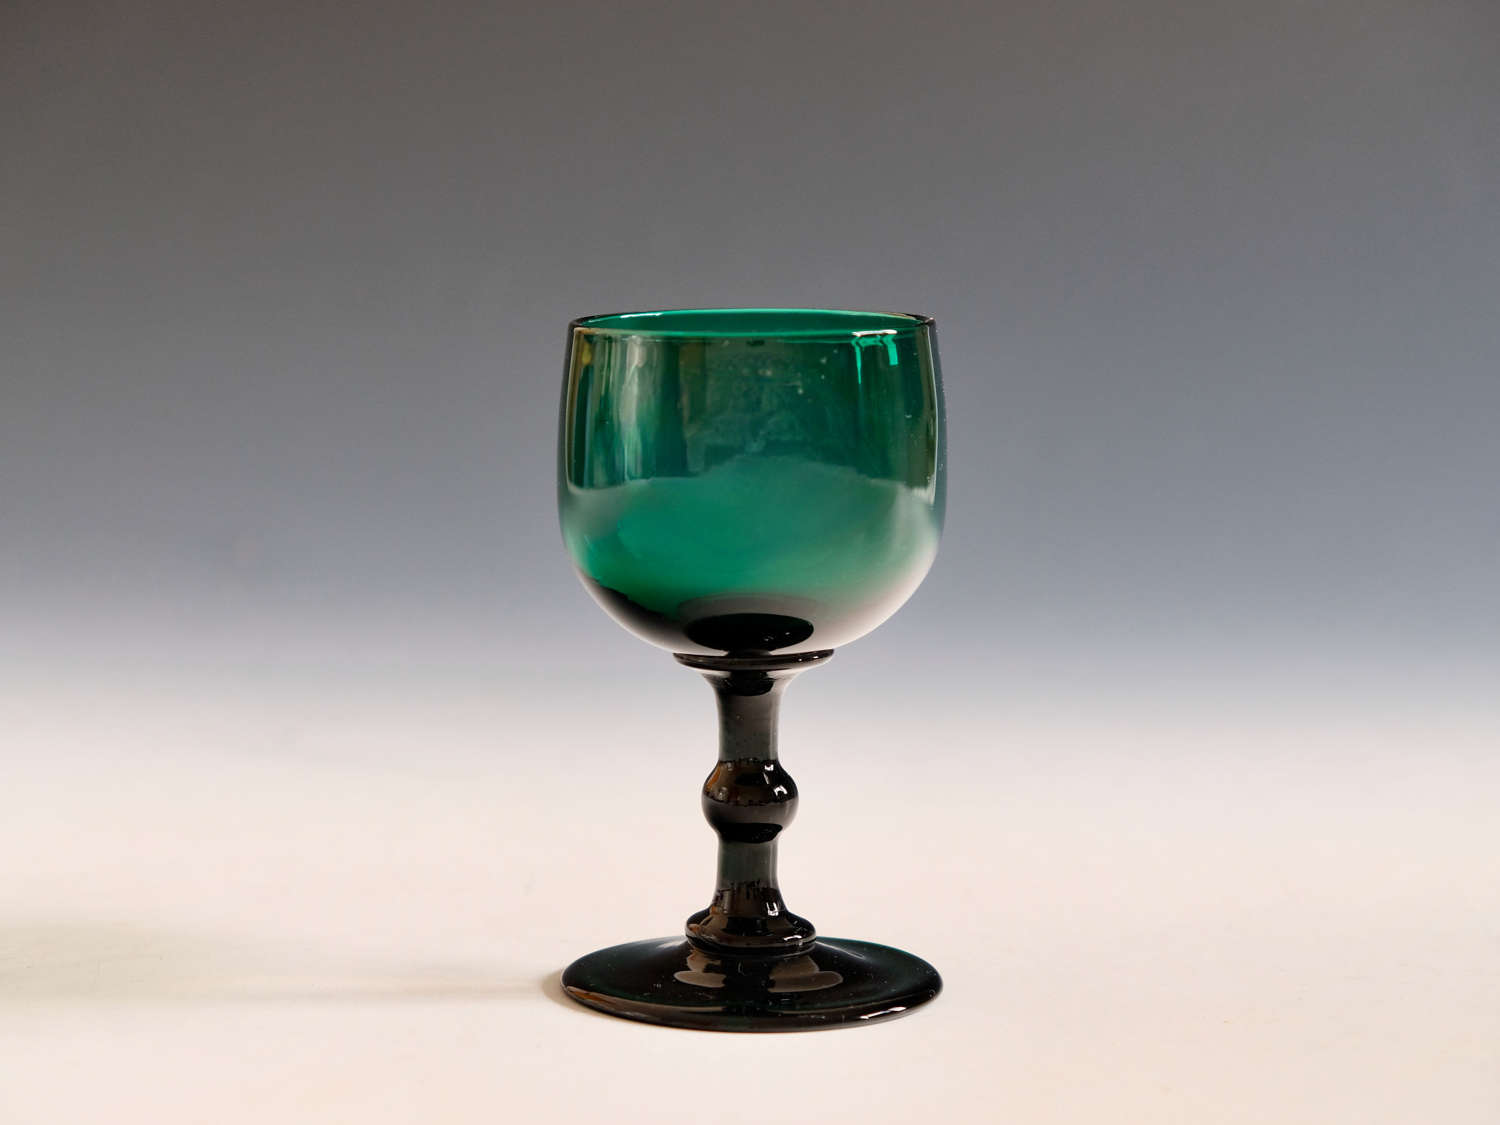 Antique glass - green wine glass English c1820